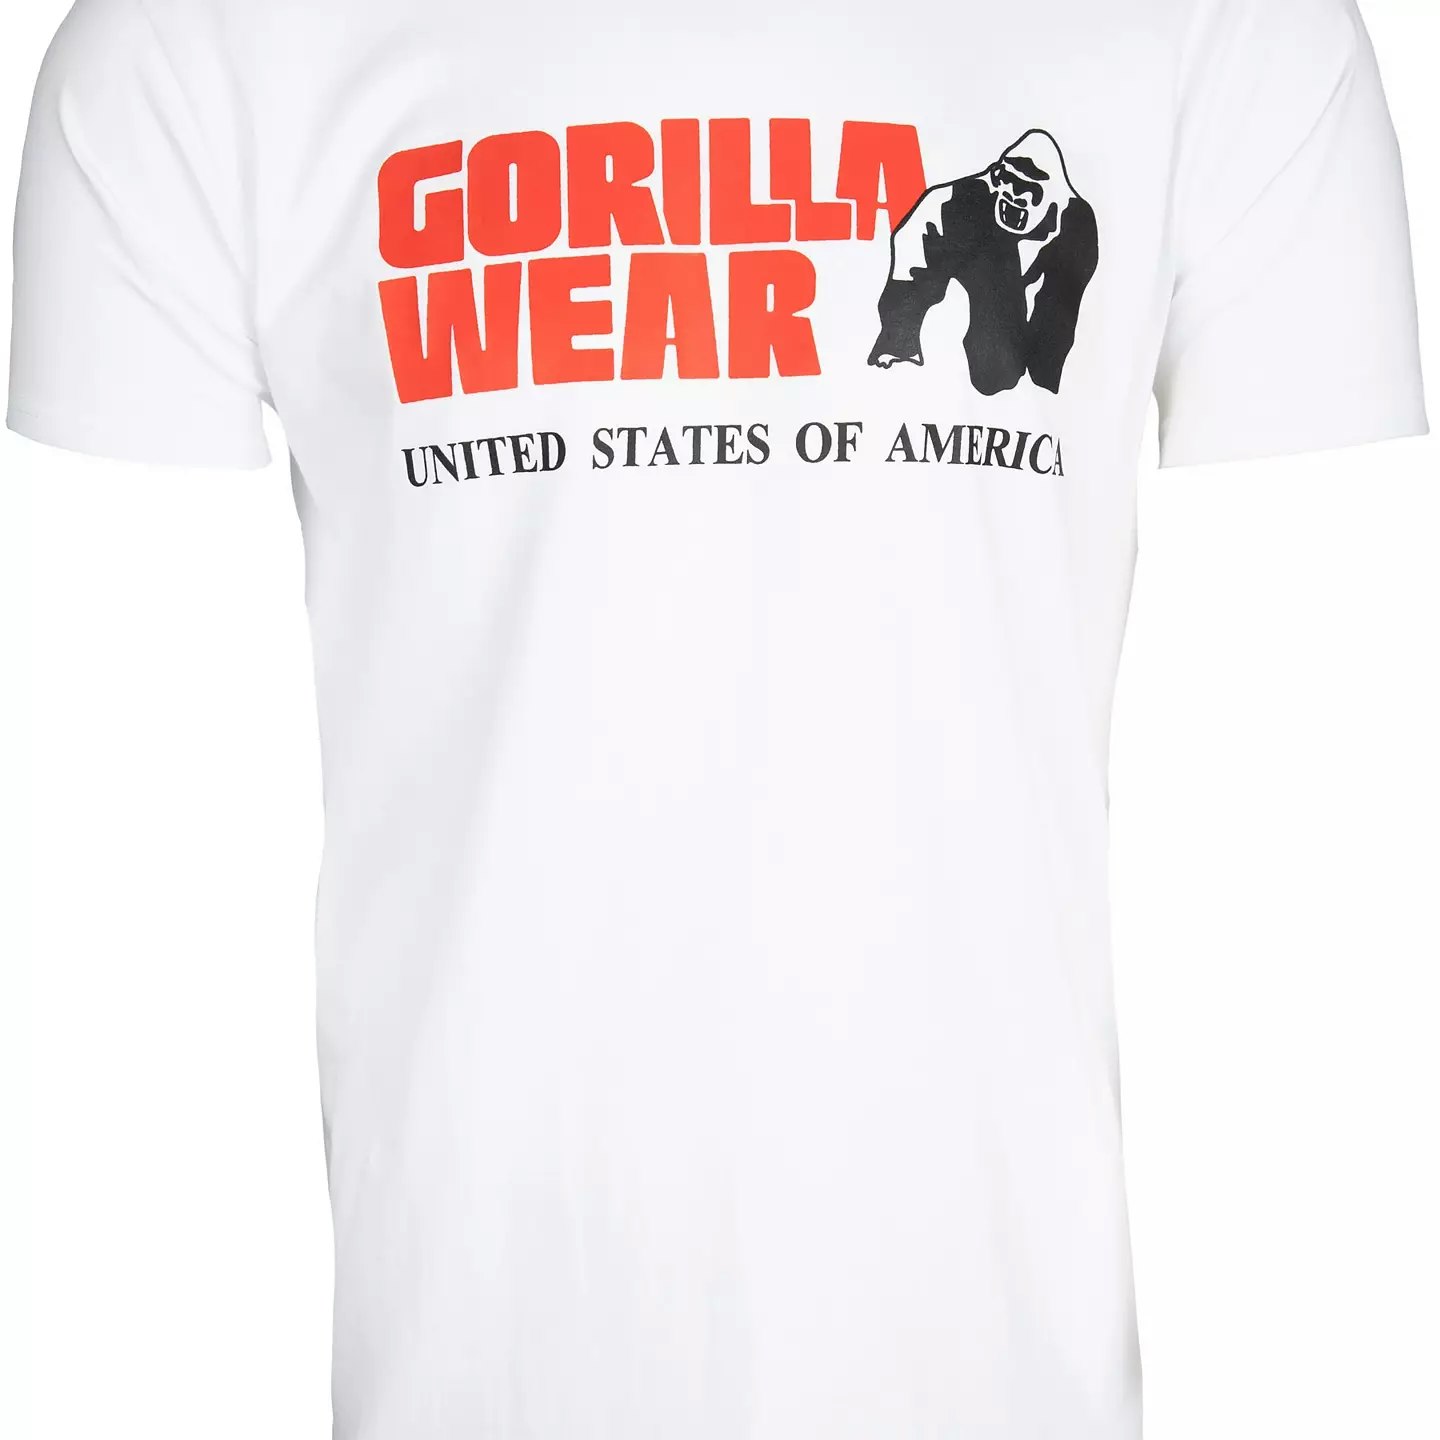 Gorilla Wear - Classic T-Shirt, white